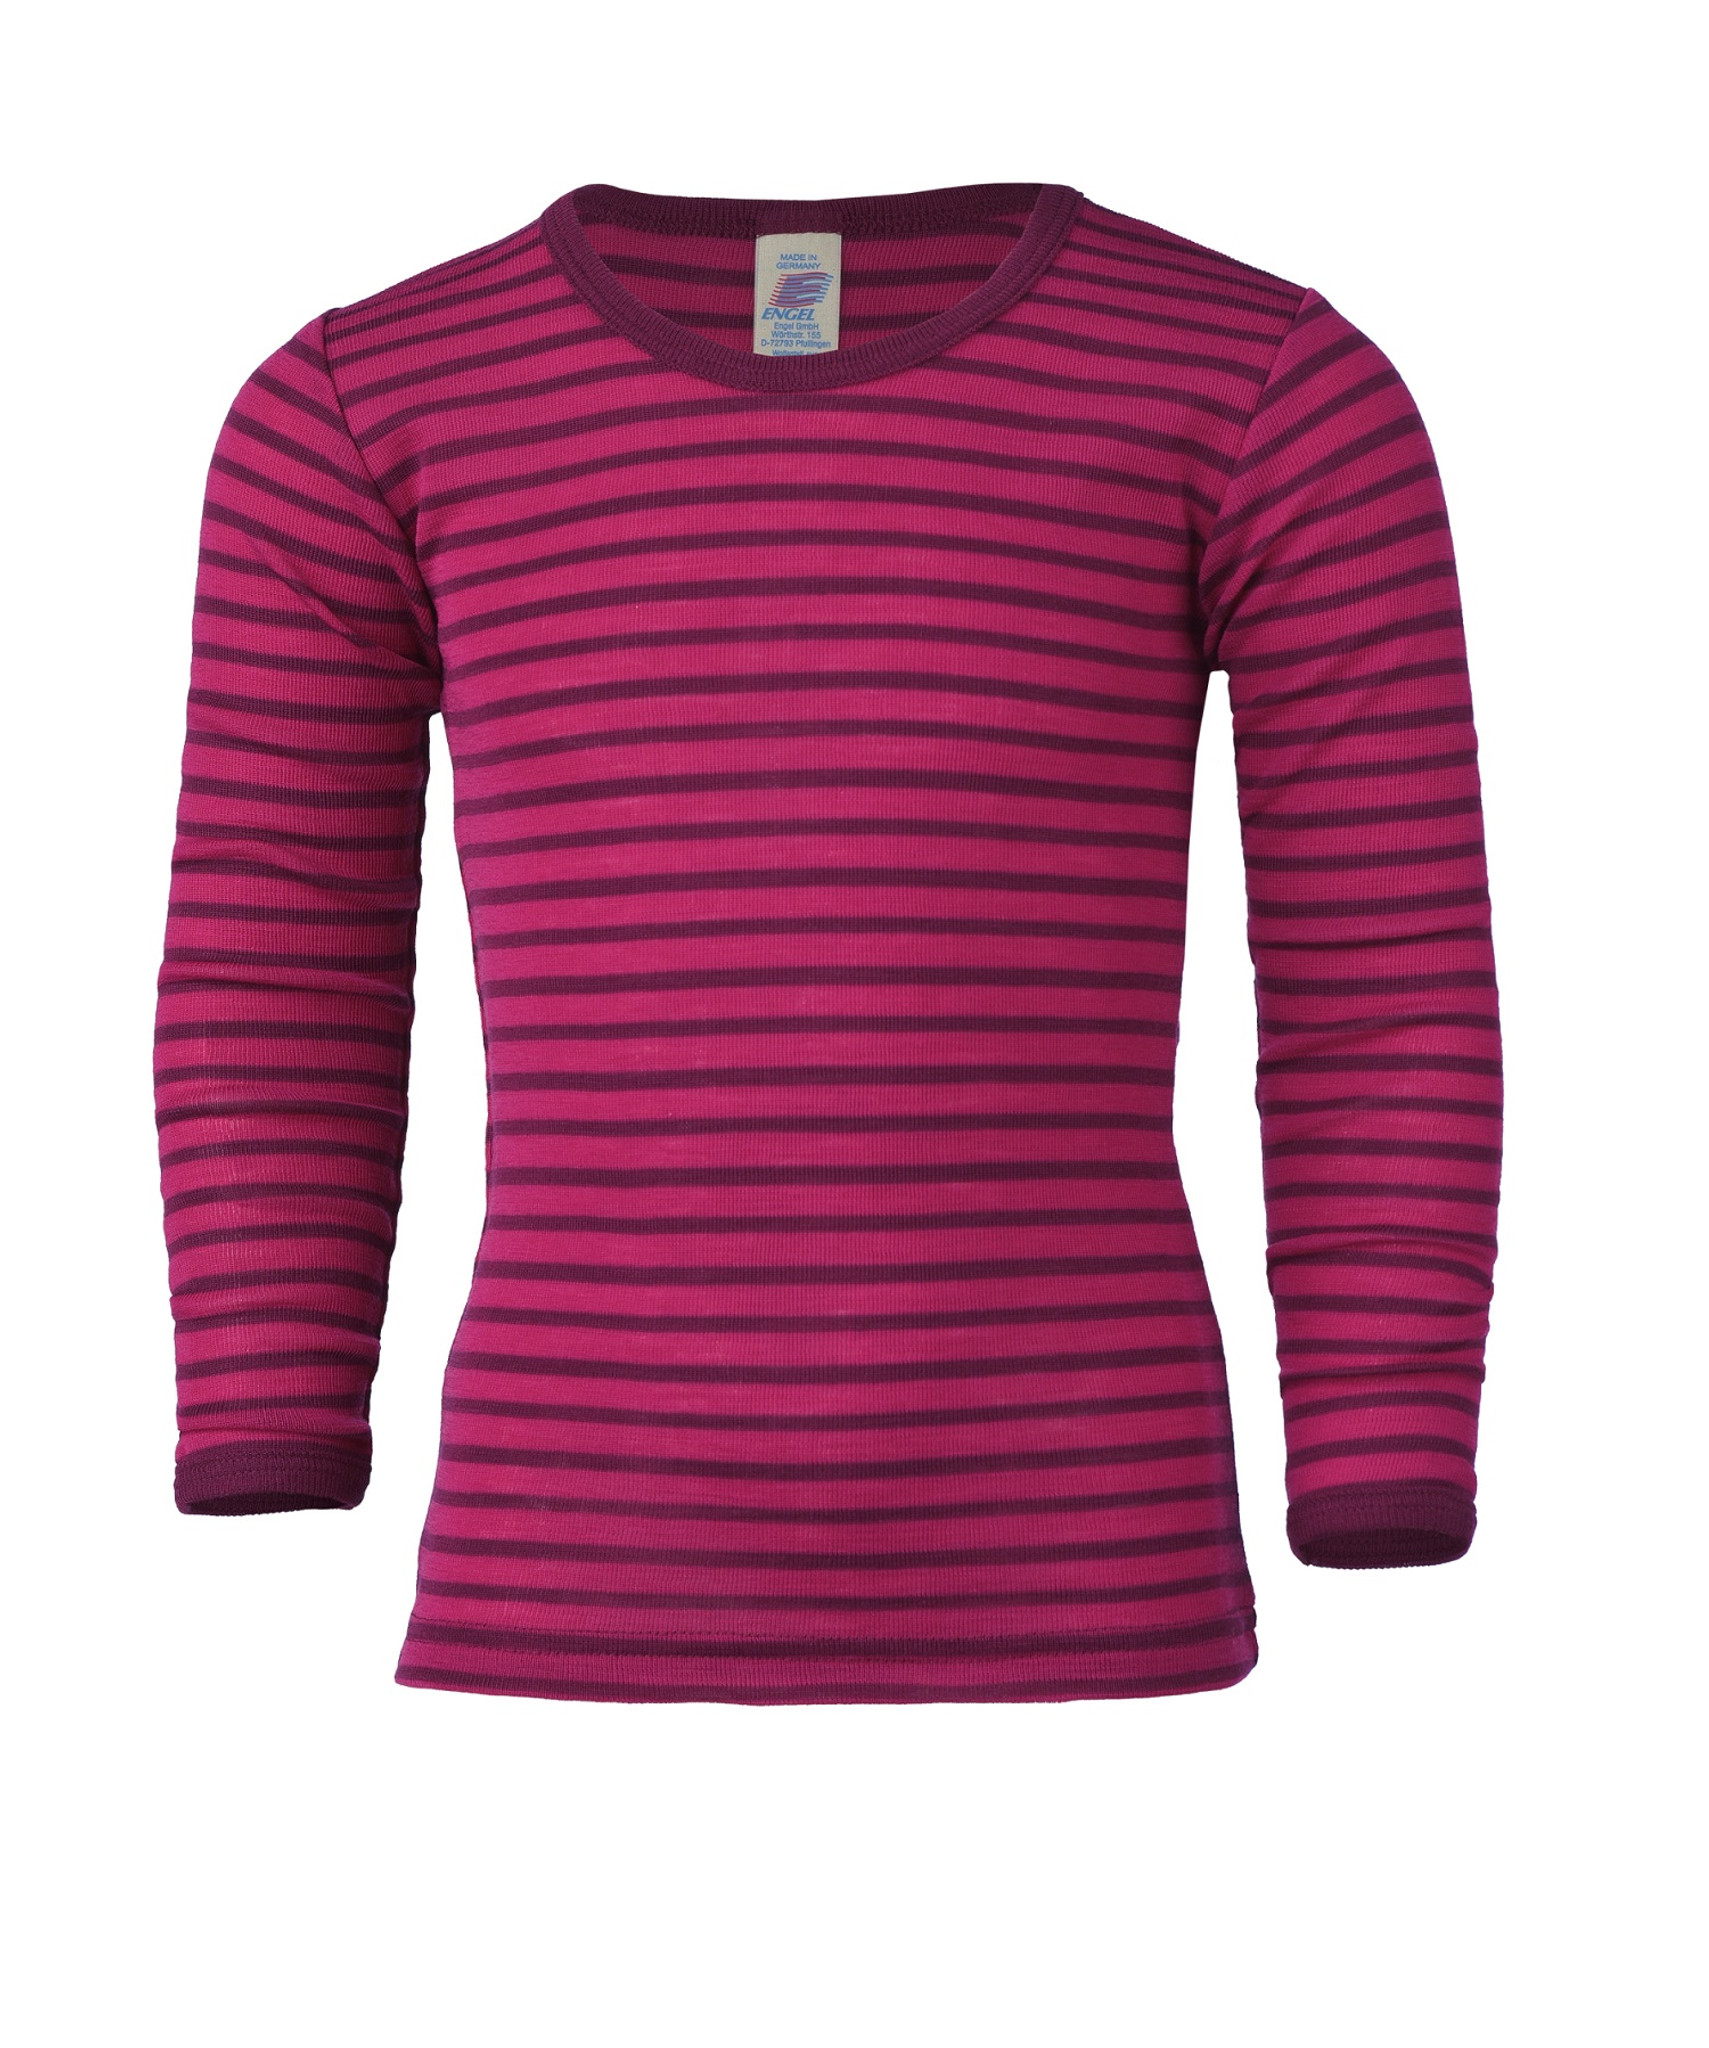 ENGEL - Kid's Short Sleeve Thermal Shirt: Warm and Thin Base Layer Top,  Organic Merino Wool Silk